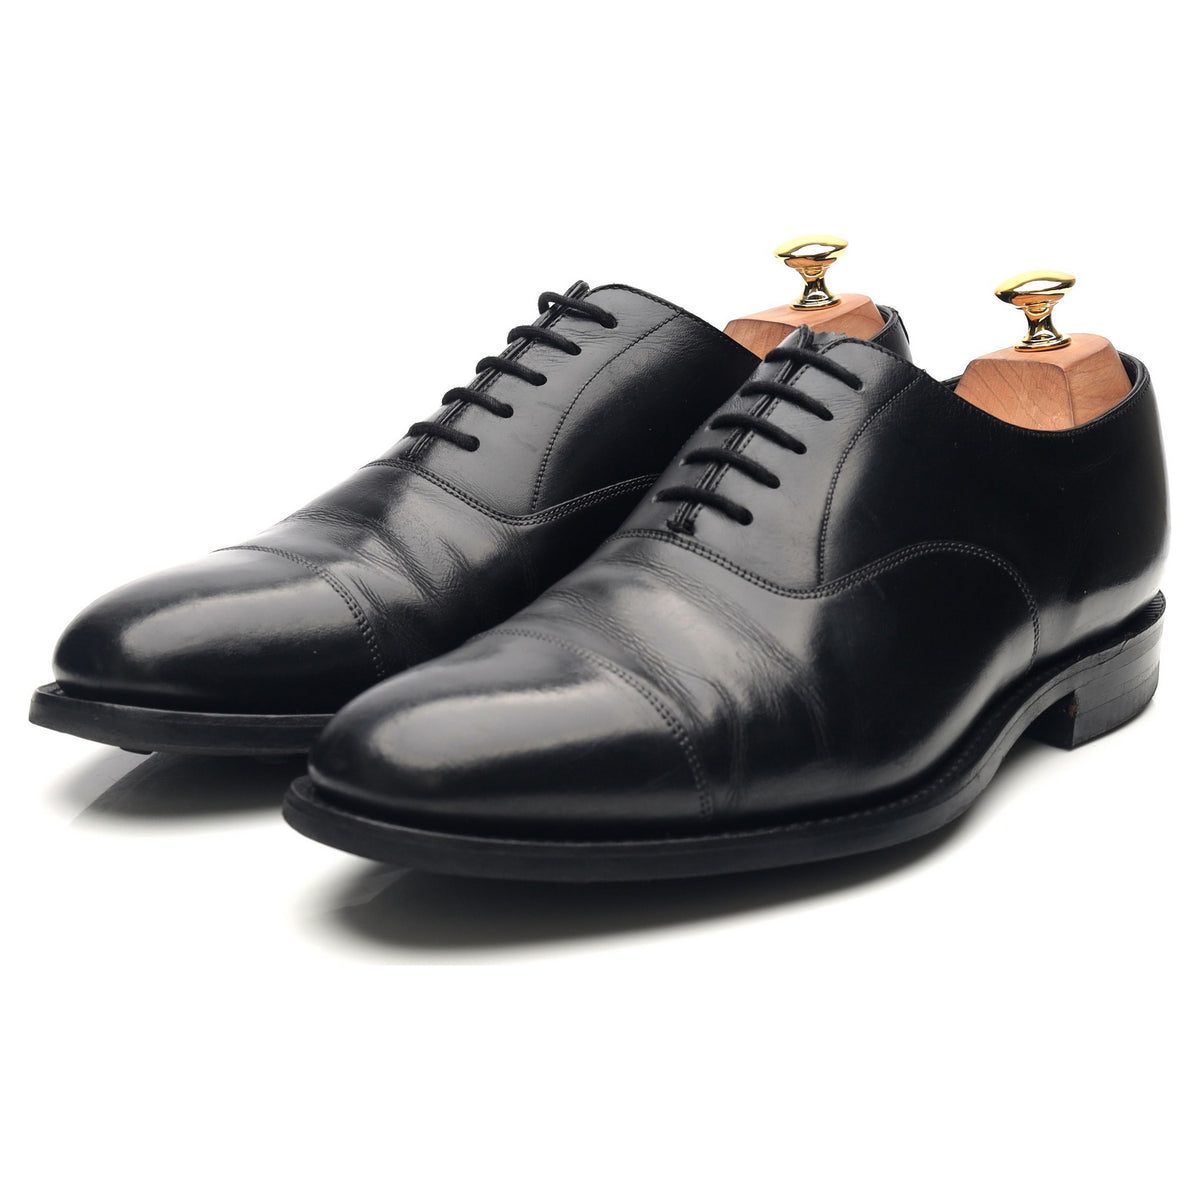 1880 &#39;Aldwych&#39; Black Leather Oxford UK 10 F